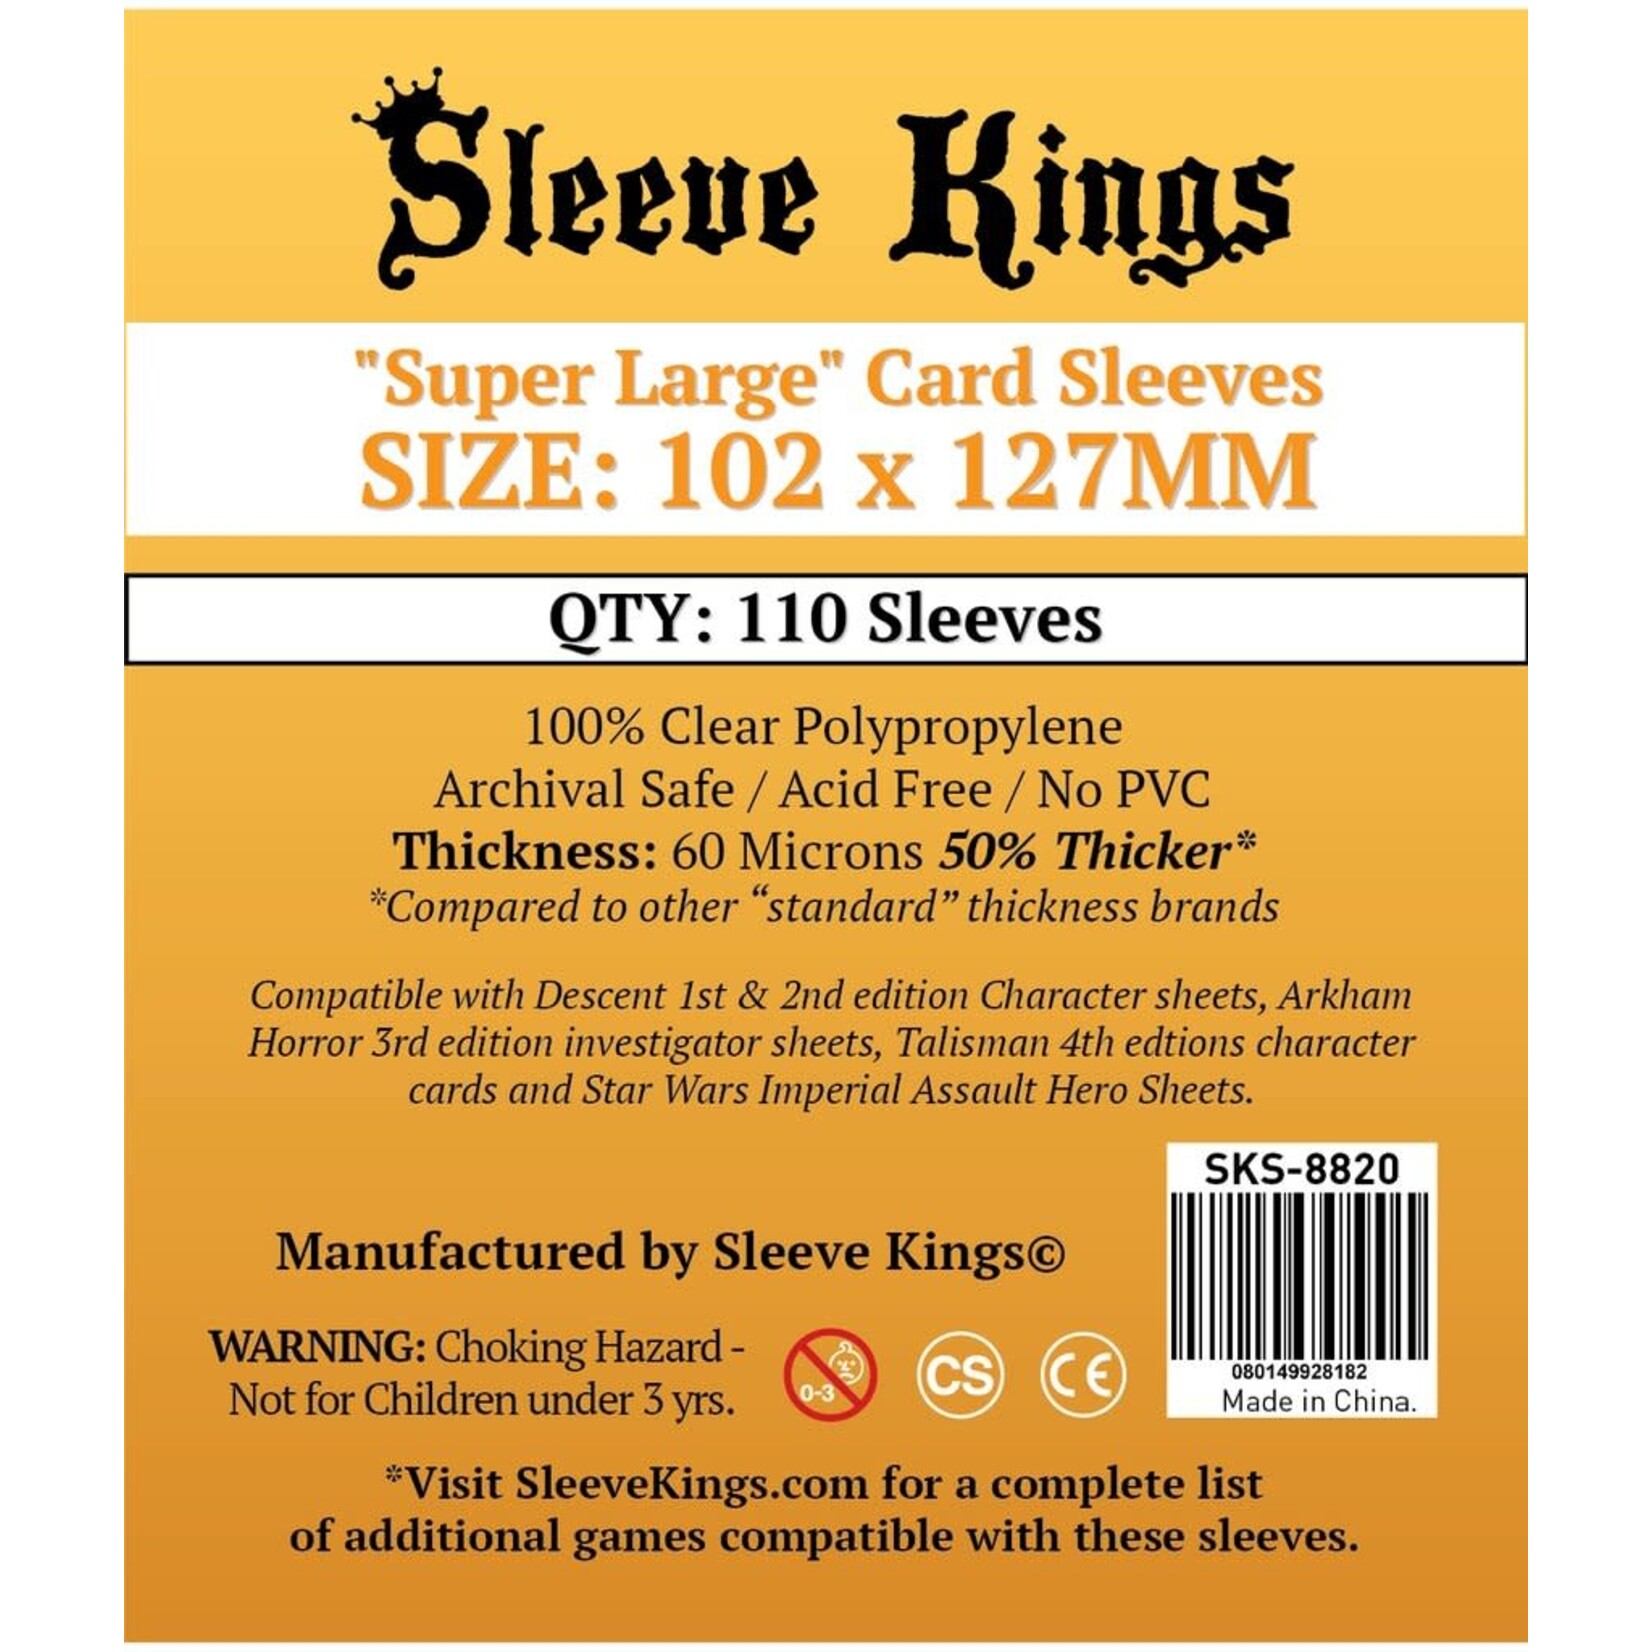 Sleeve Kings SK Super Large